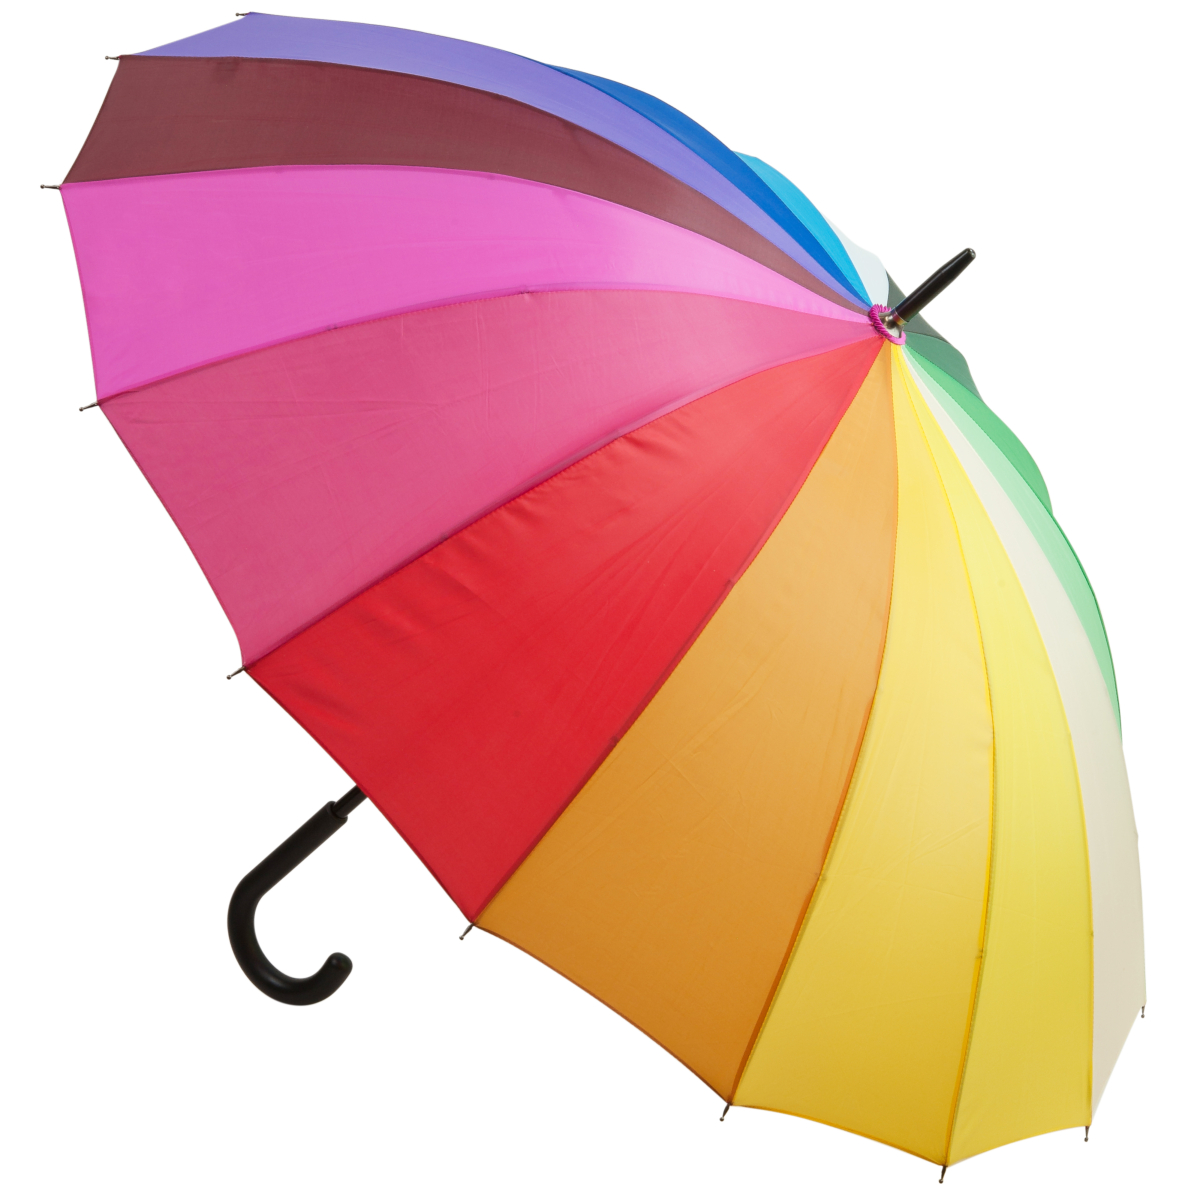 Rainbow Walker Umbrella by Susino